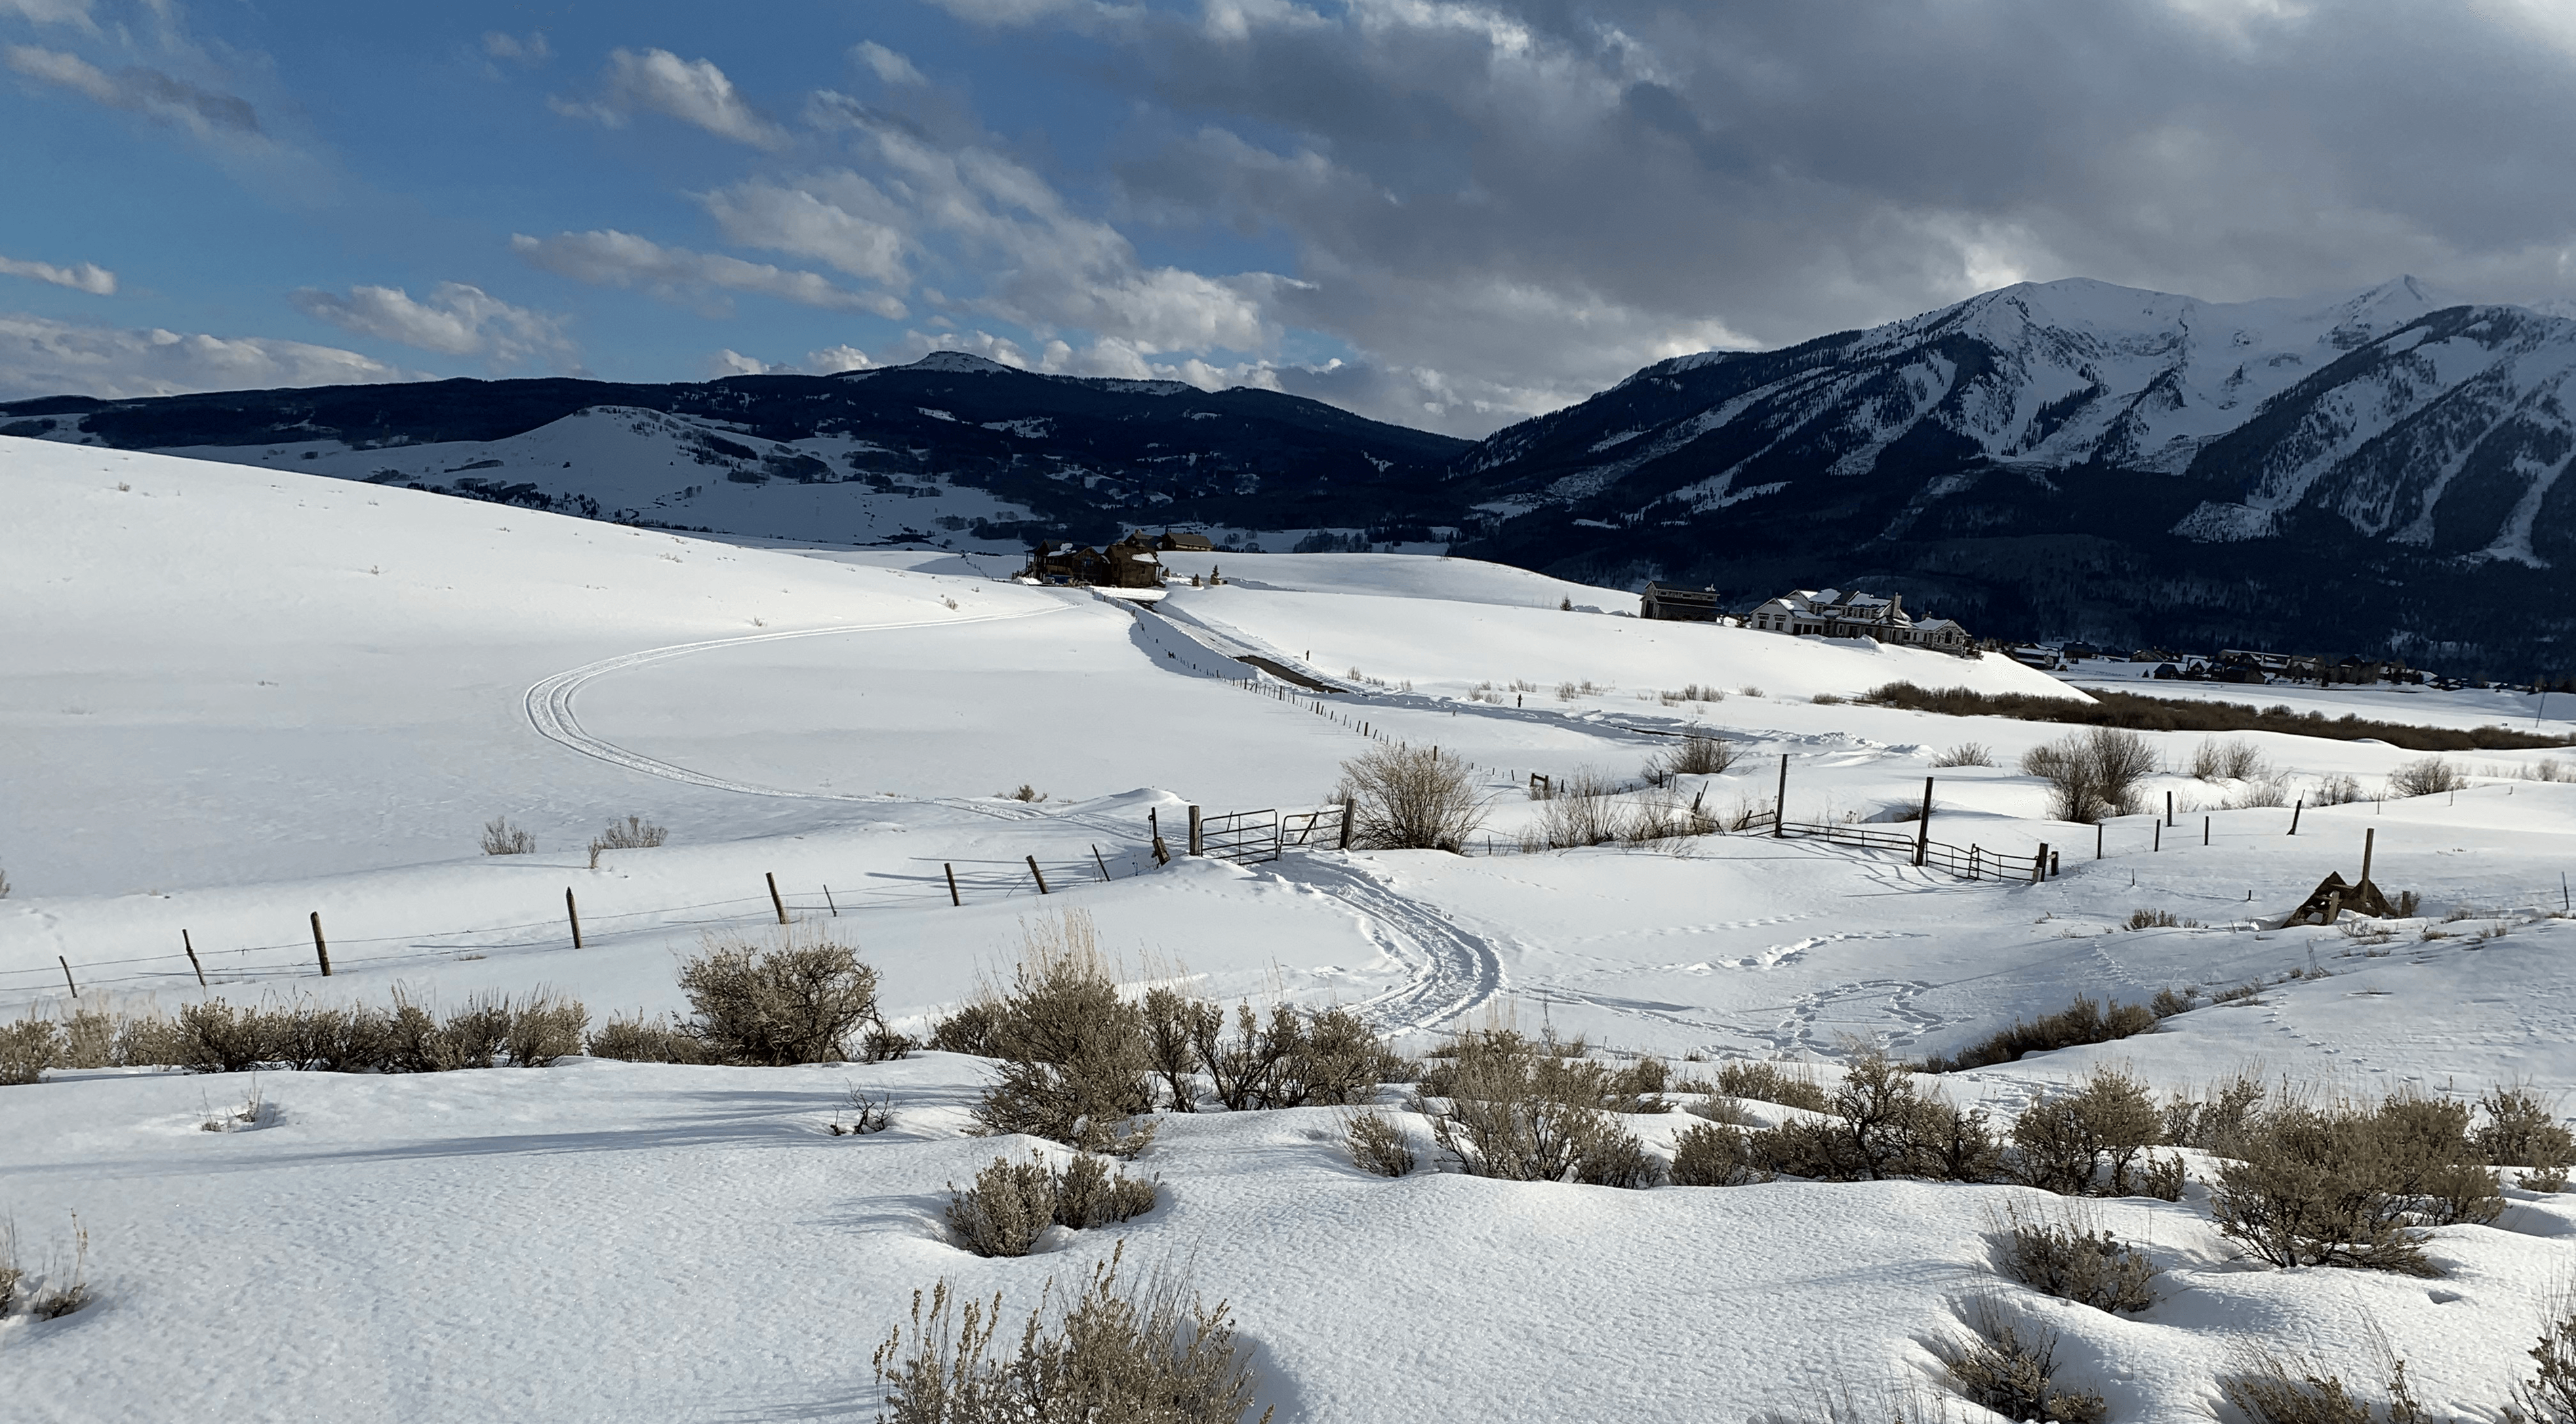 Snowy mountain landscape in the Brush Creek area